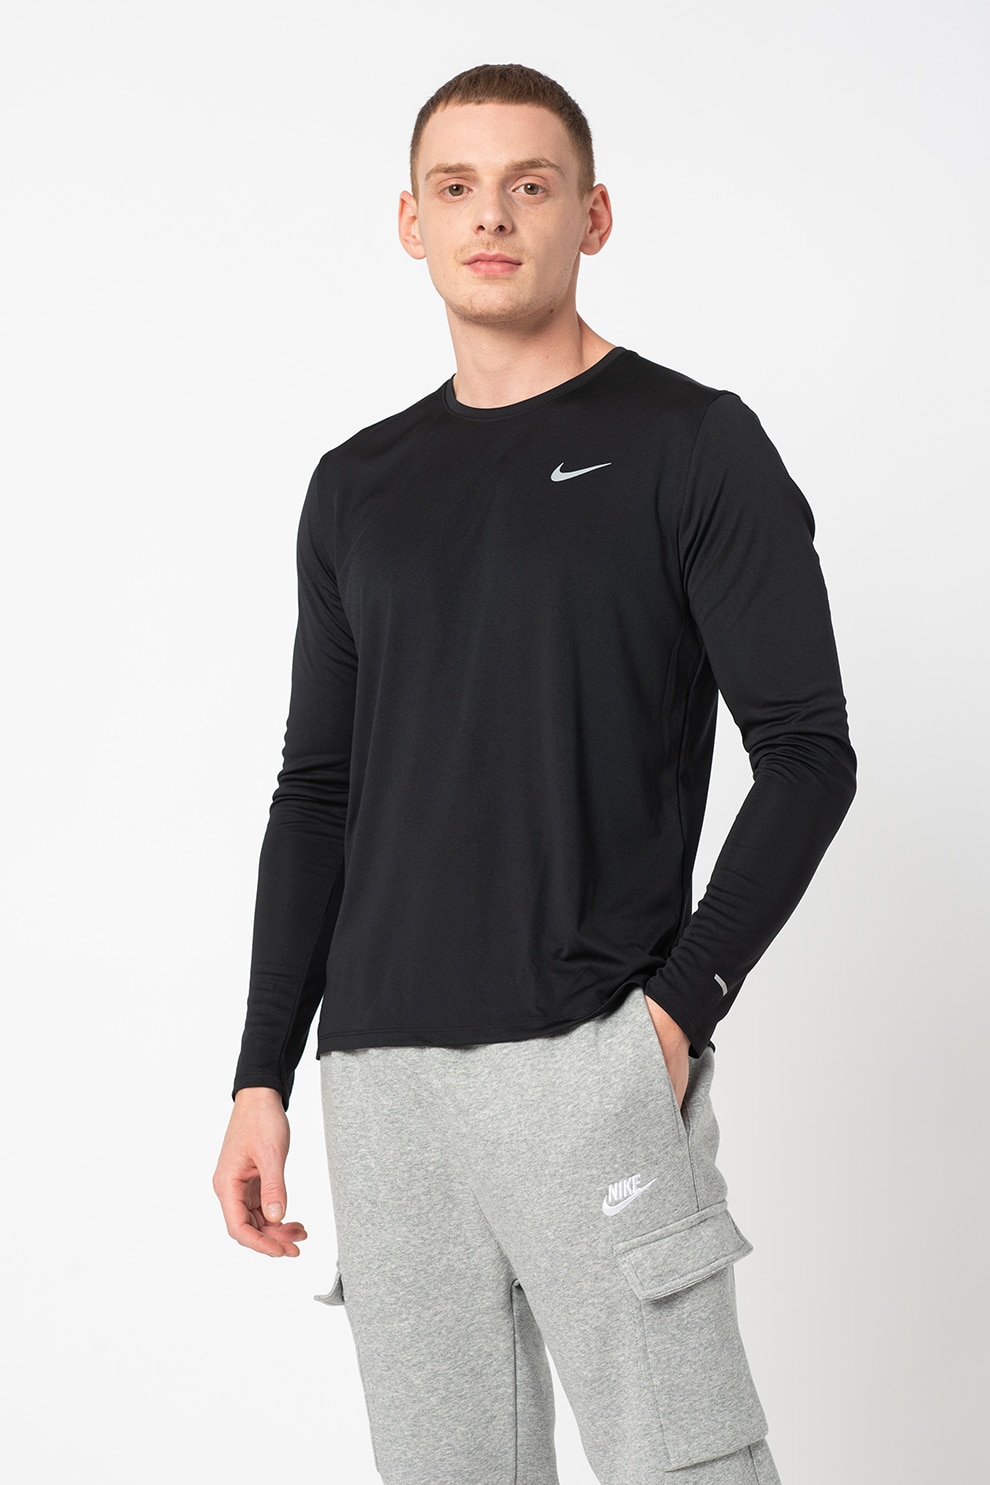 North Sea painful Nike, Bluza cu logo reflectorizant si tehnologie Dri-Fit, pentru alergare  Miler, Negru, 2XL - eMAG.ro